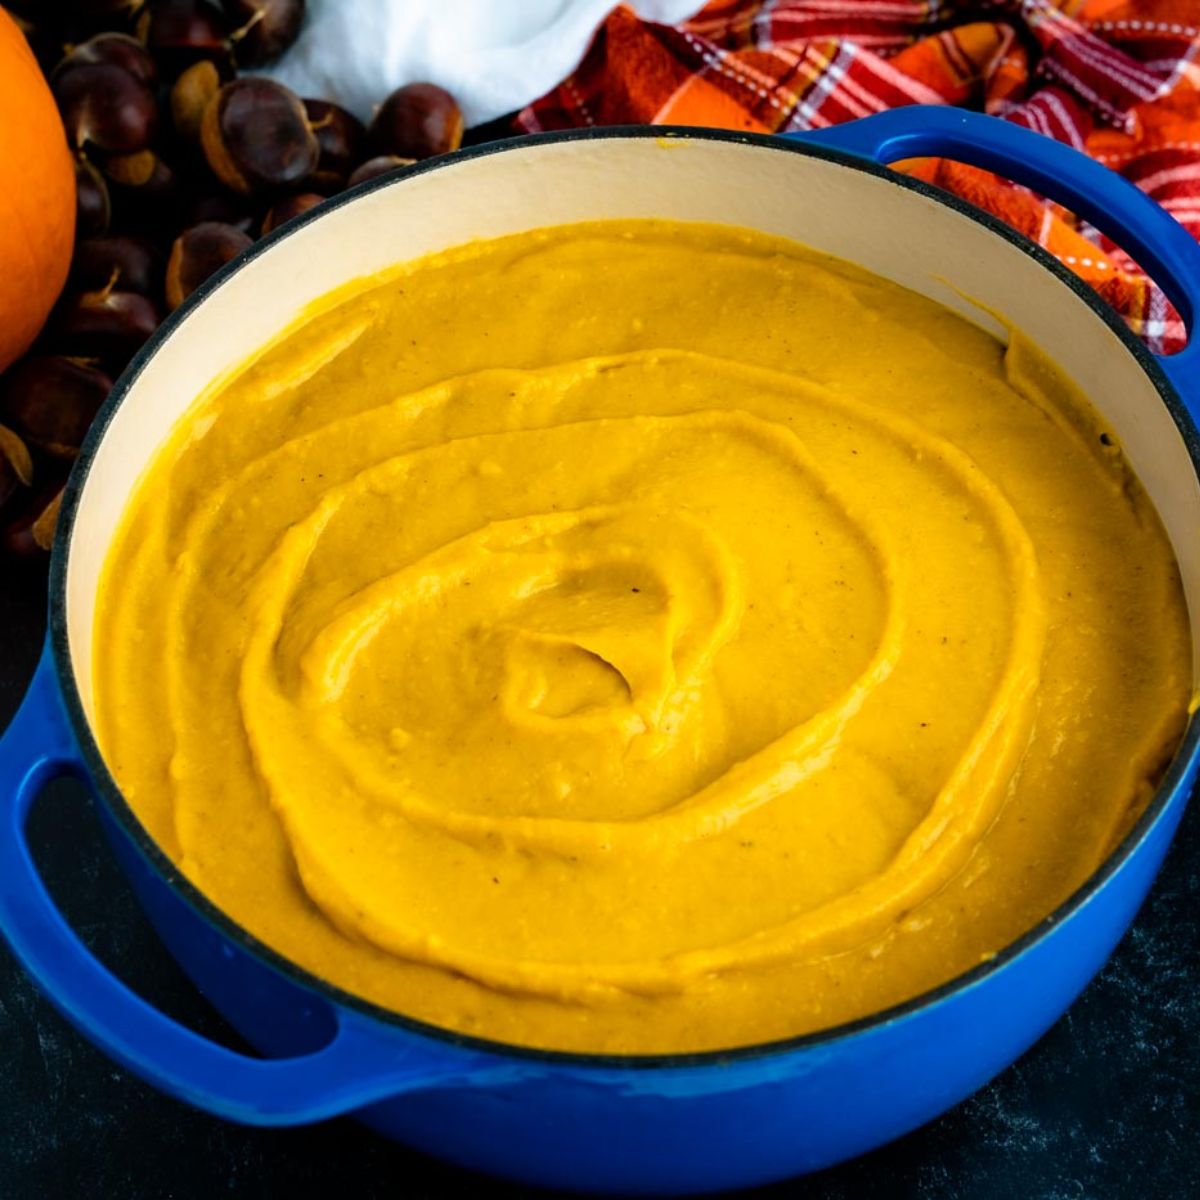 Blue soup pot filled with a swirled orange-gold pumpkin chestnut soup